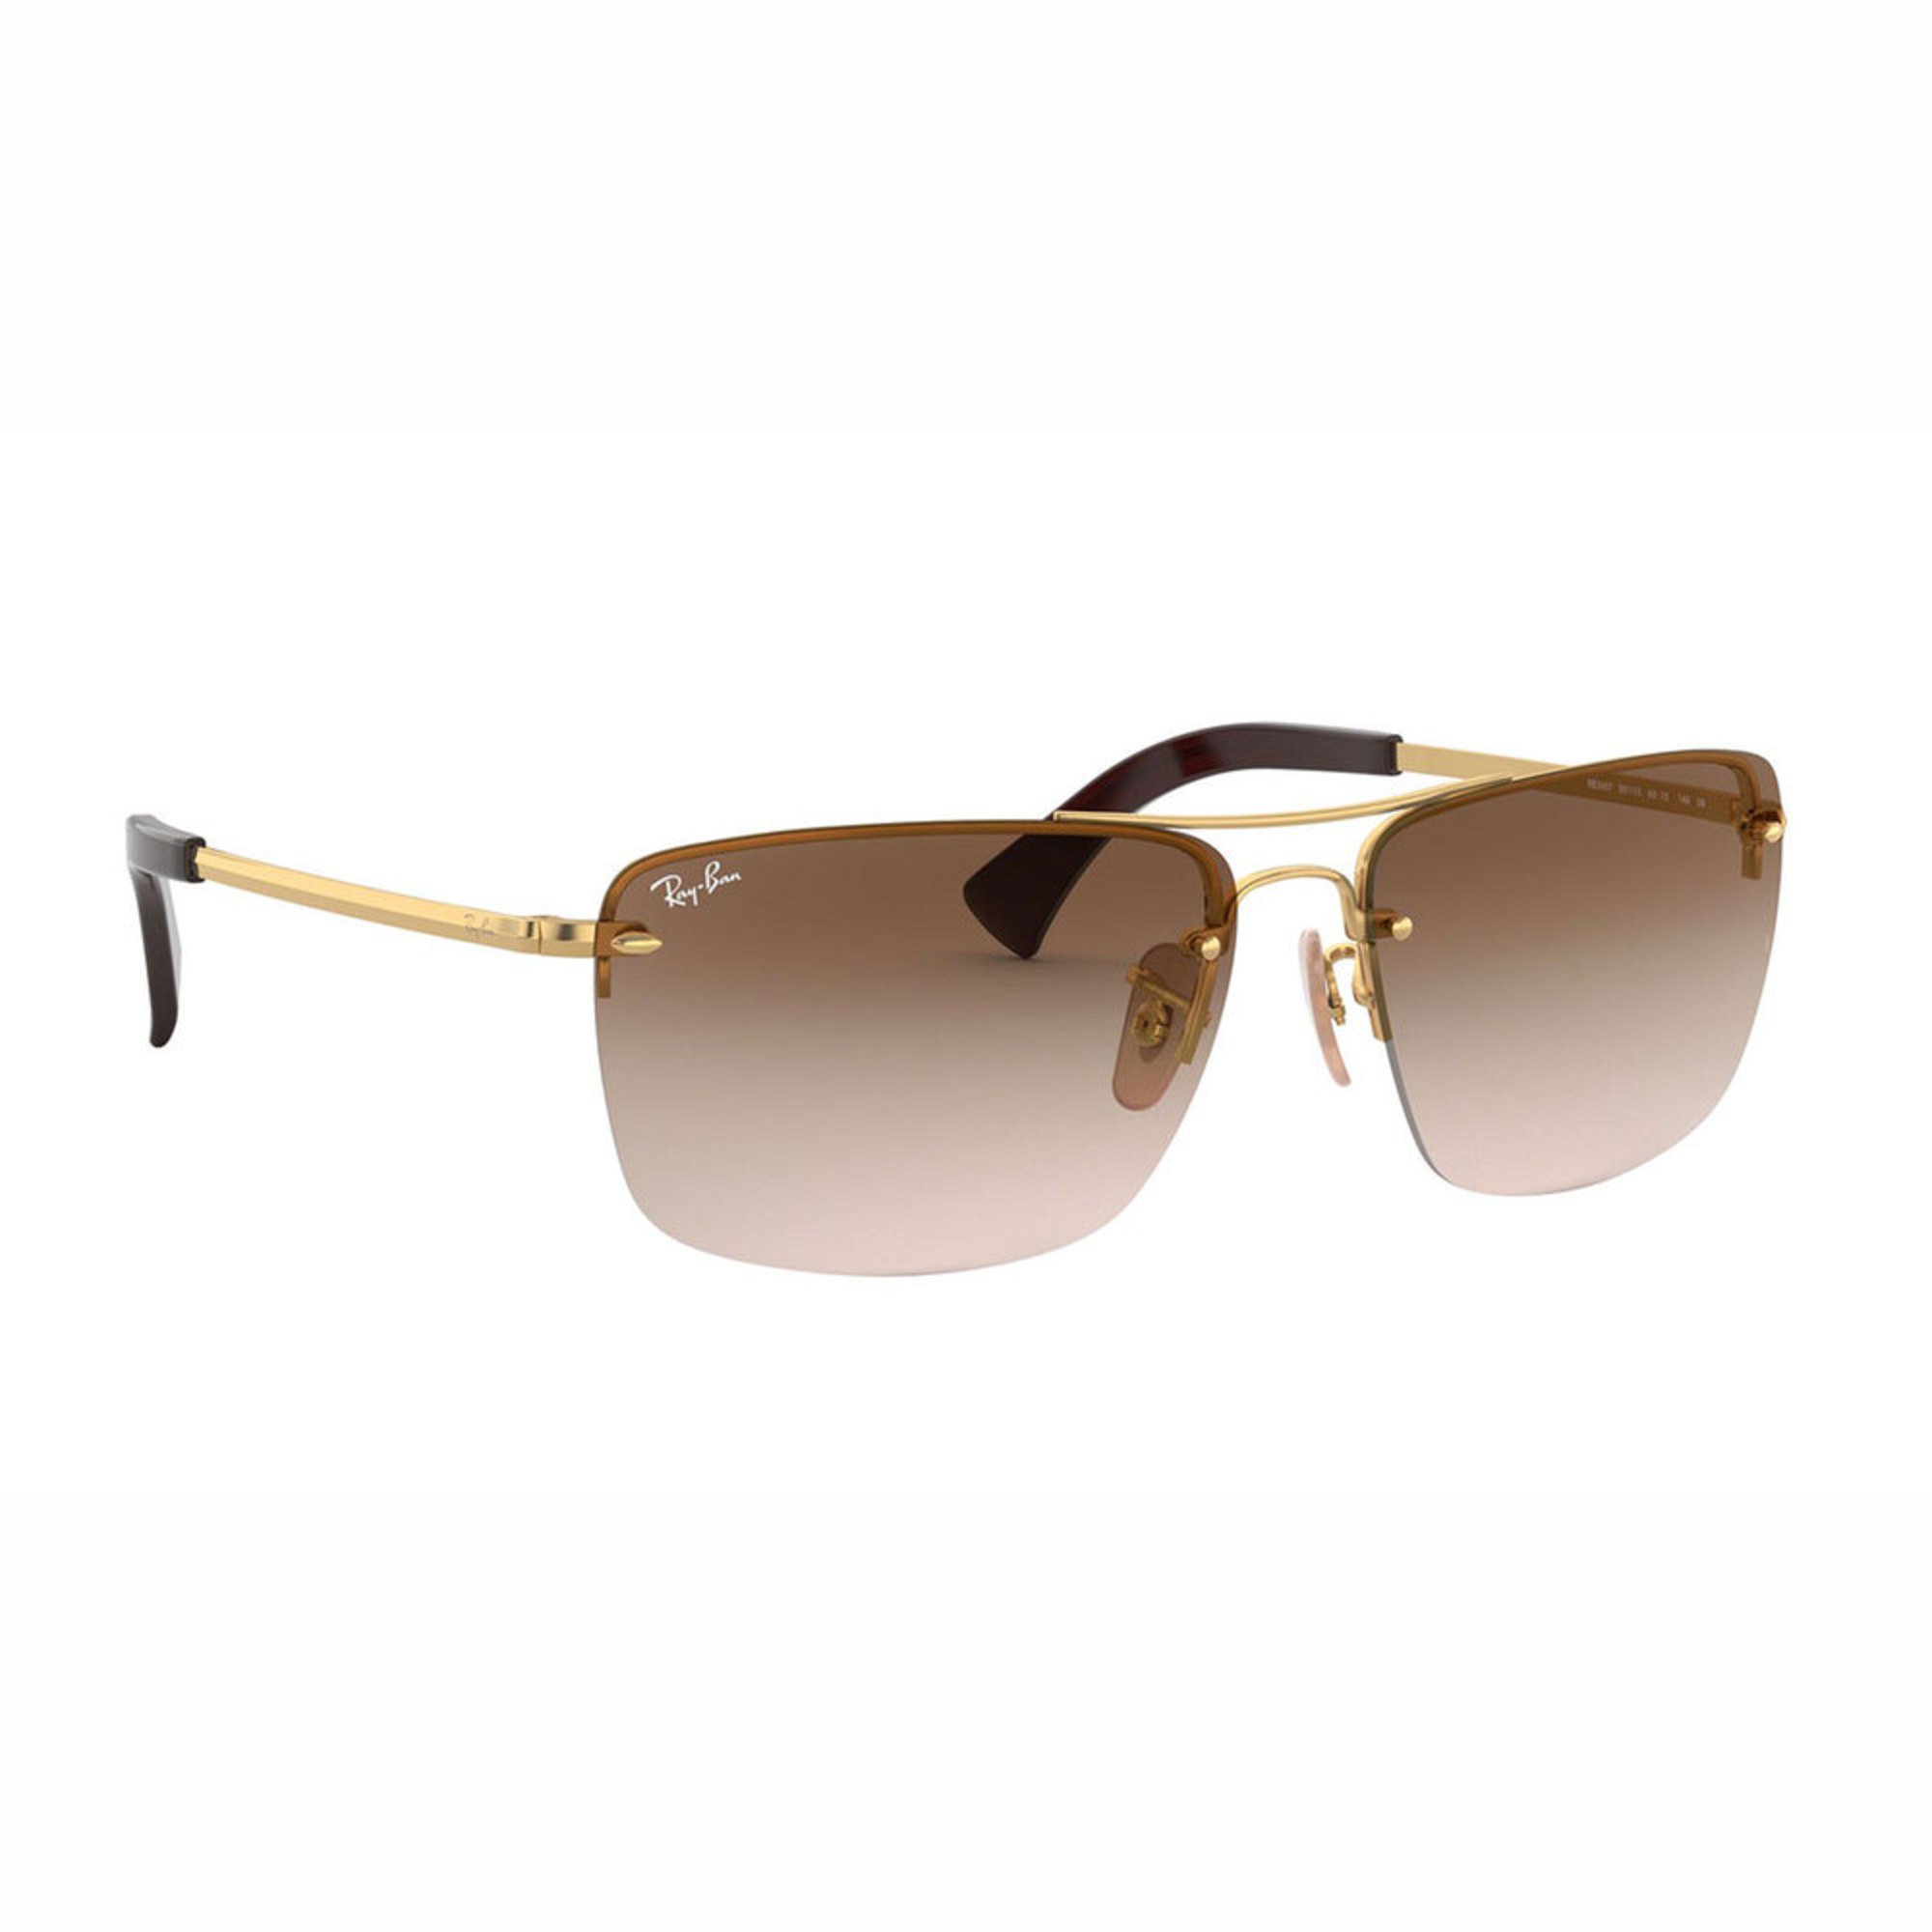 Ray-ban Men's Gold Sunglasses 61mm 